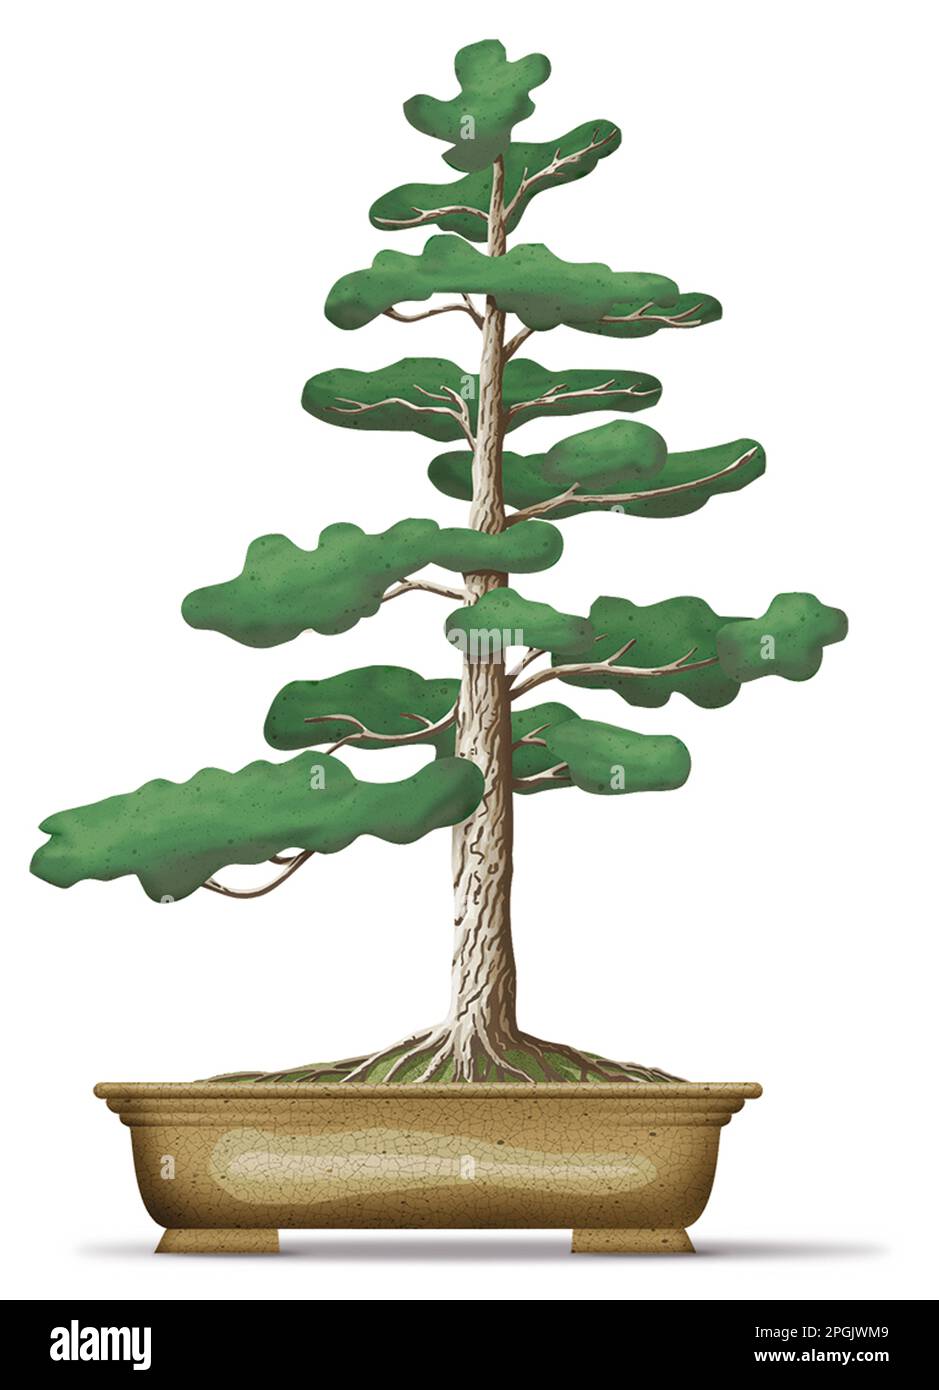 Formal upright style bonsai tree Stock Photo